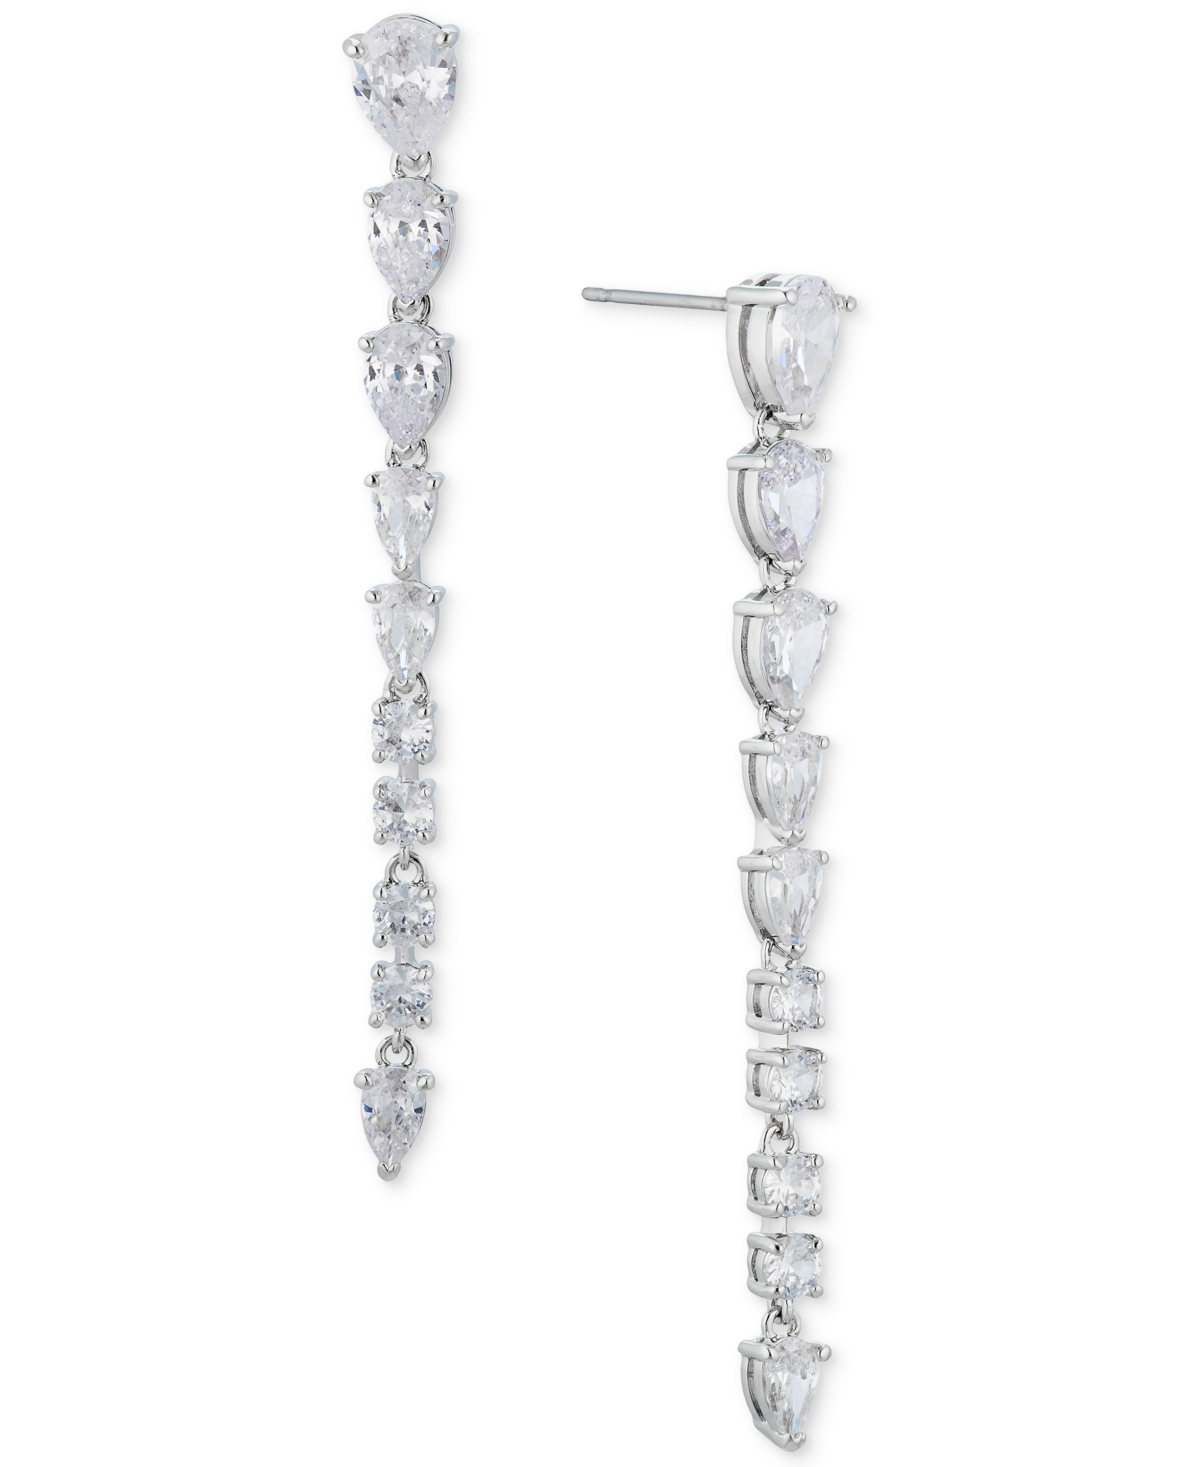 Eliot Danori Silver-tone Mixed Stone Long Linear Drop Earrings, Created For Macy's